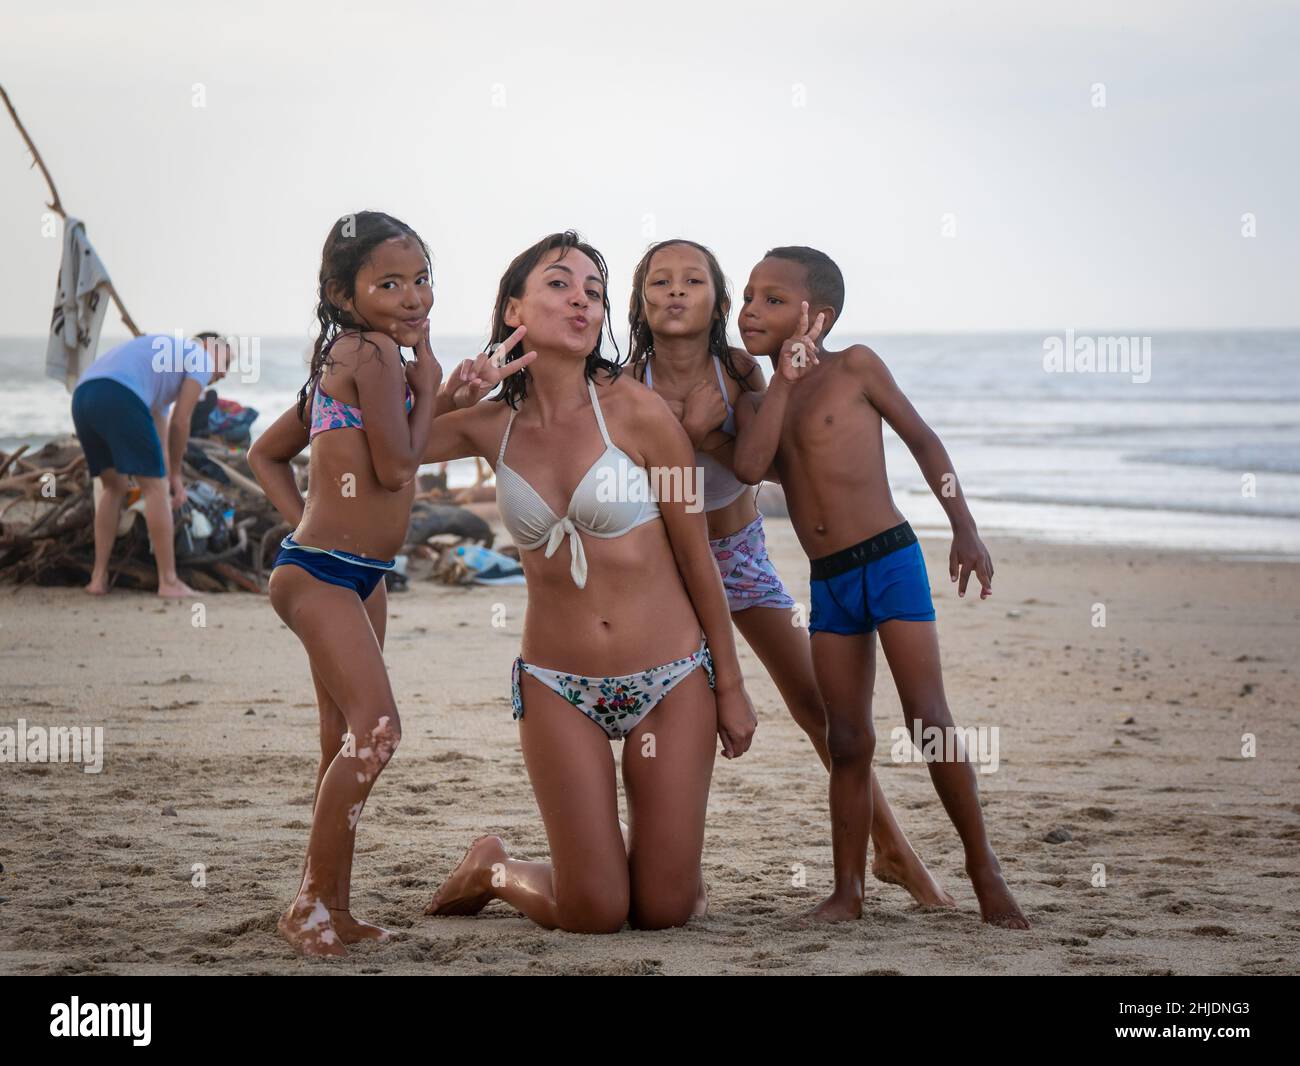 Woman bikini beach child hi-res stock photography and images - Alamy